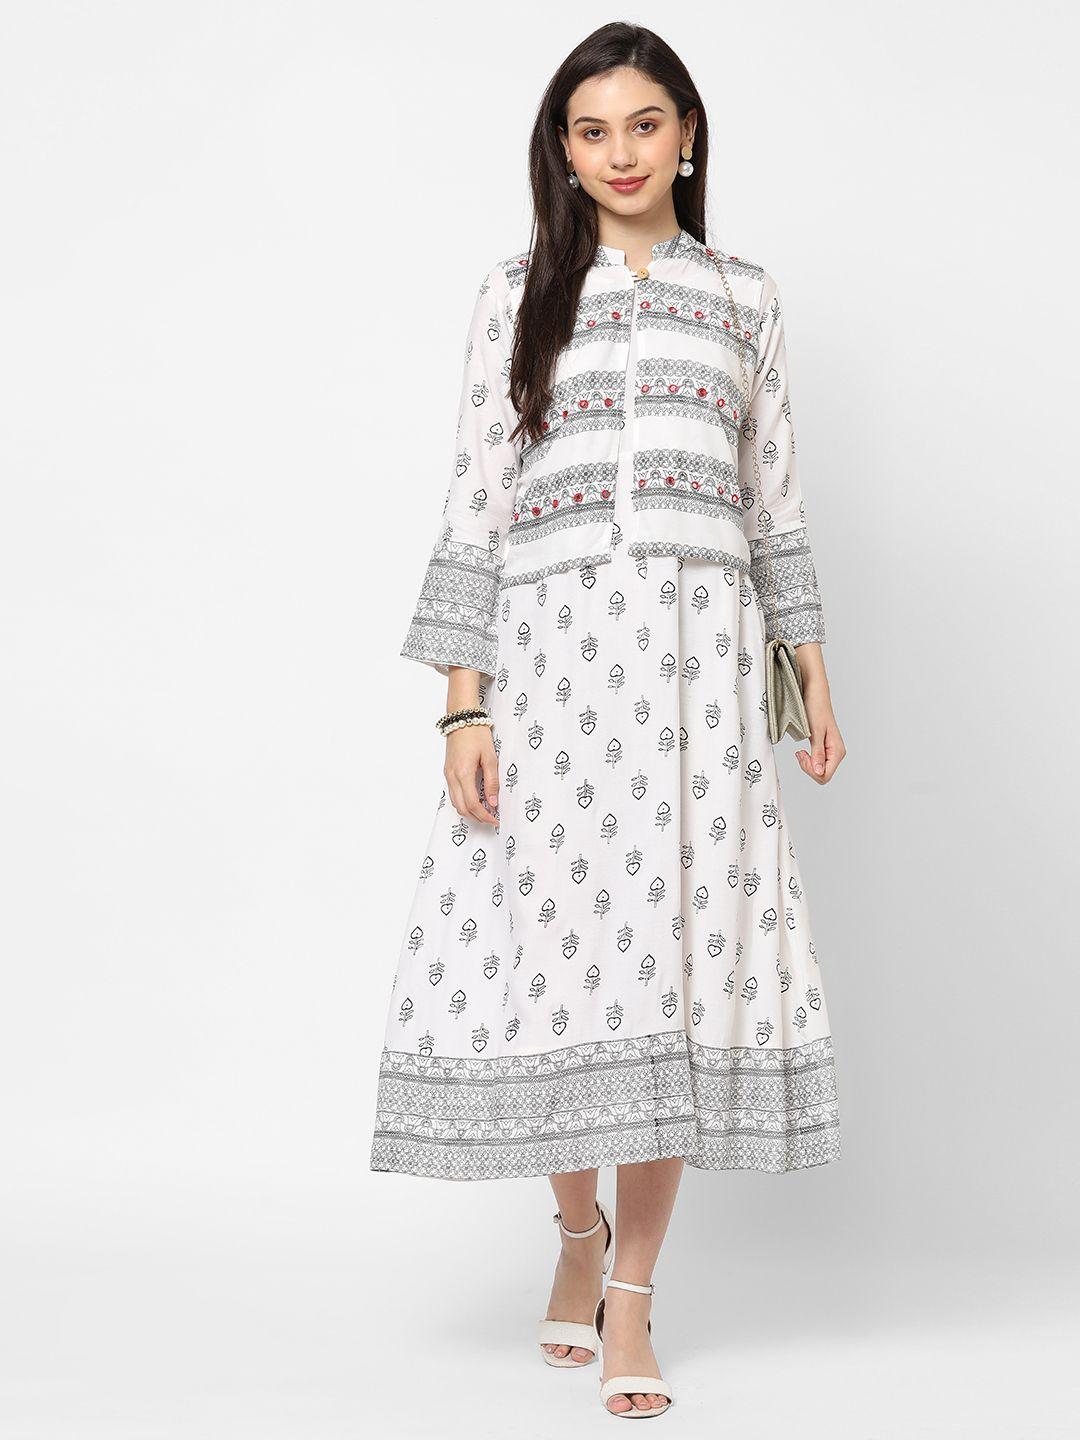 redround-white-&-grey-ethnic-motifs-ethnic-a-line-midi-dress-with-jacket